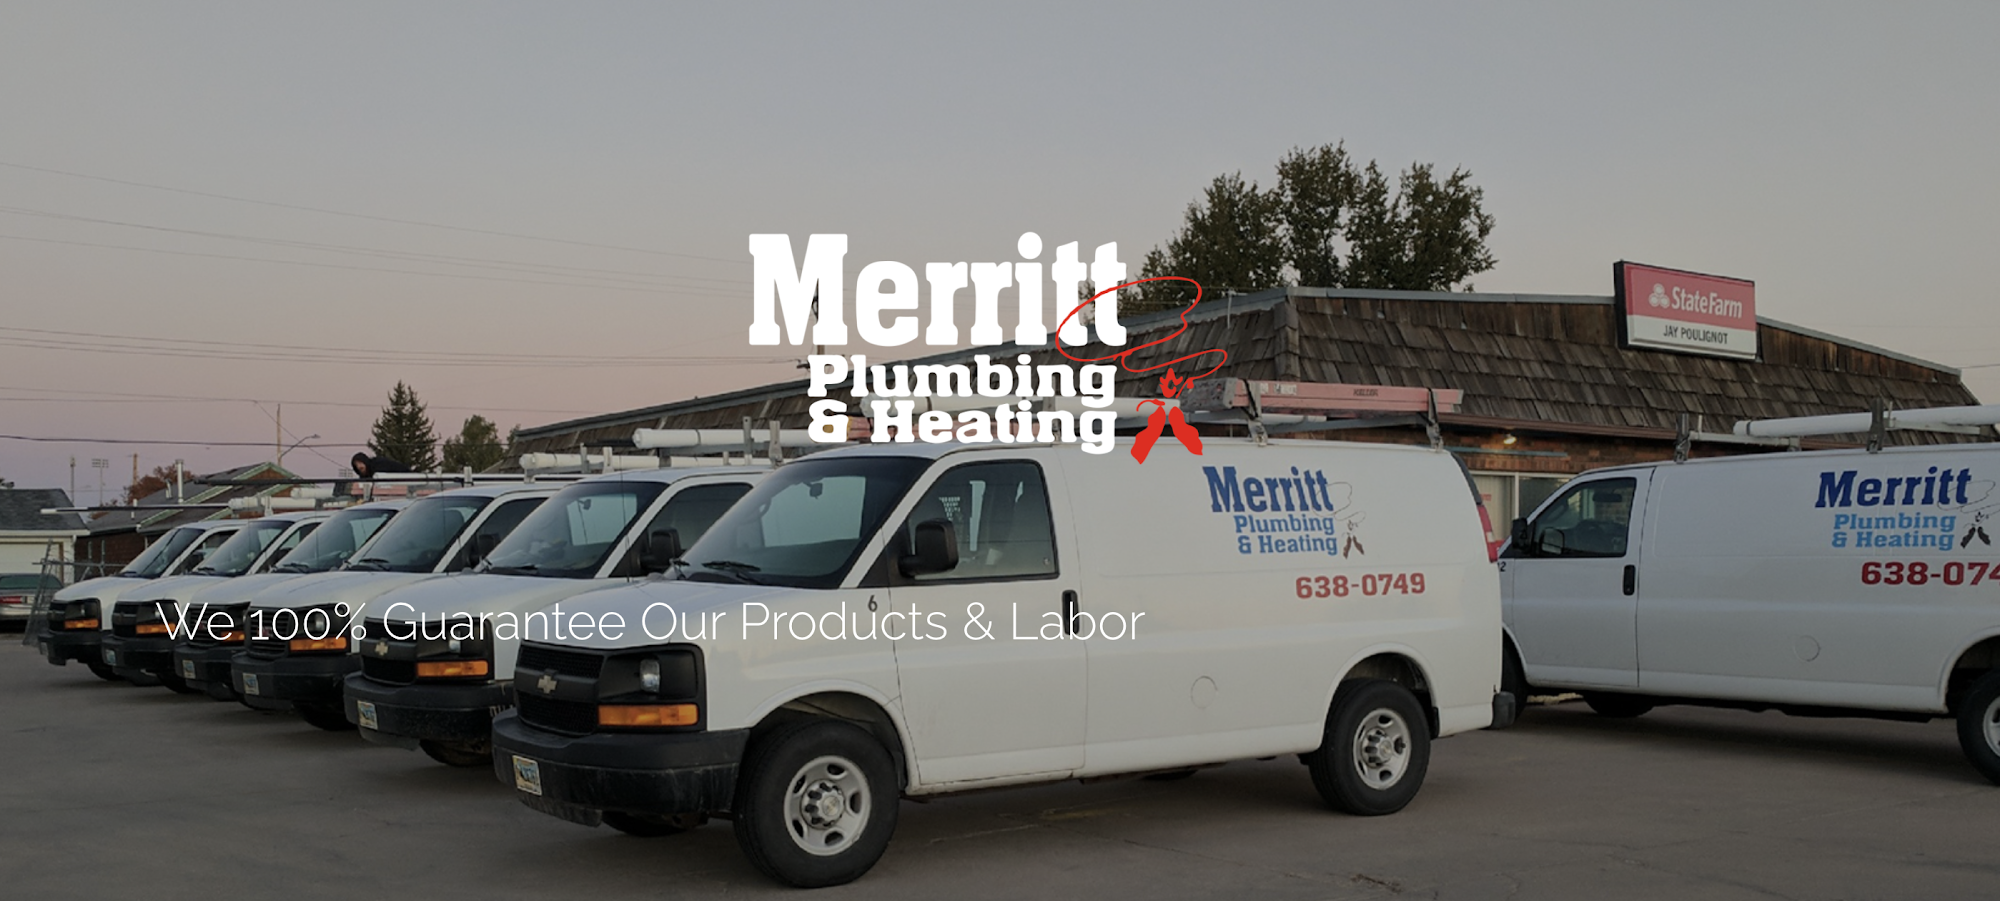 Merritt Plumbing & Heating Inc.